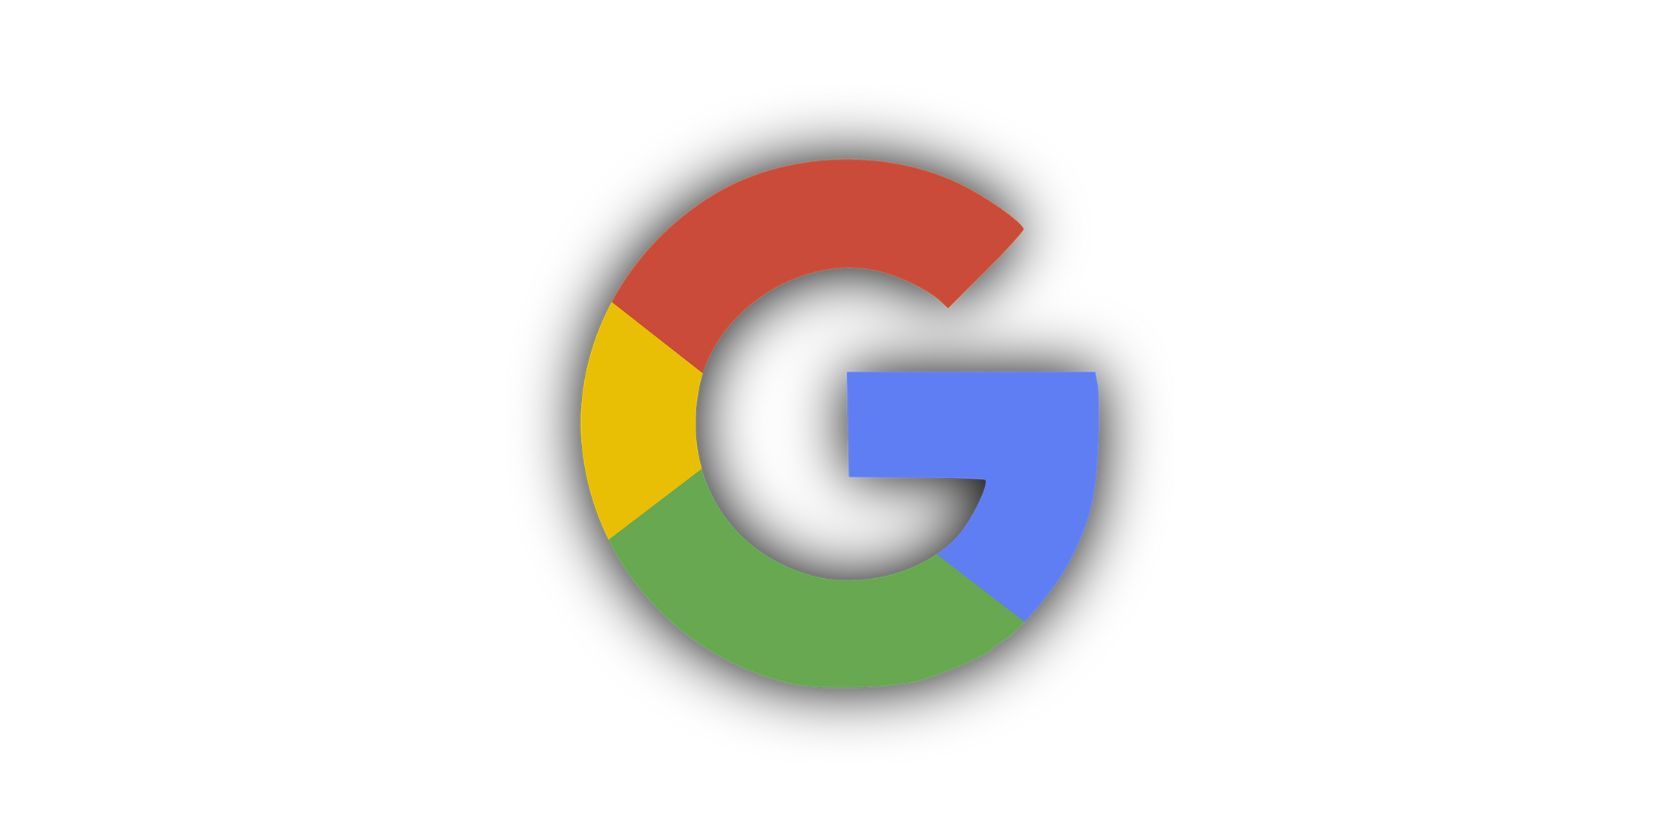 Google logo seen on white background